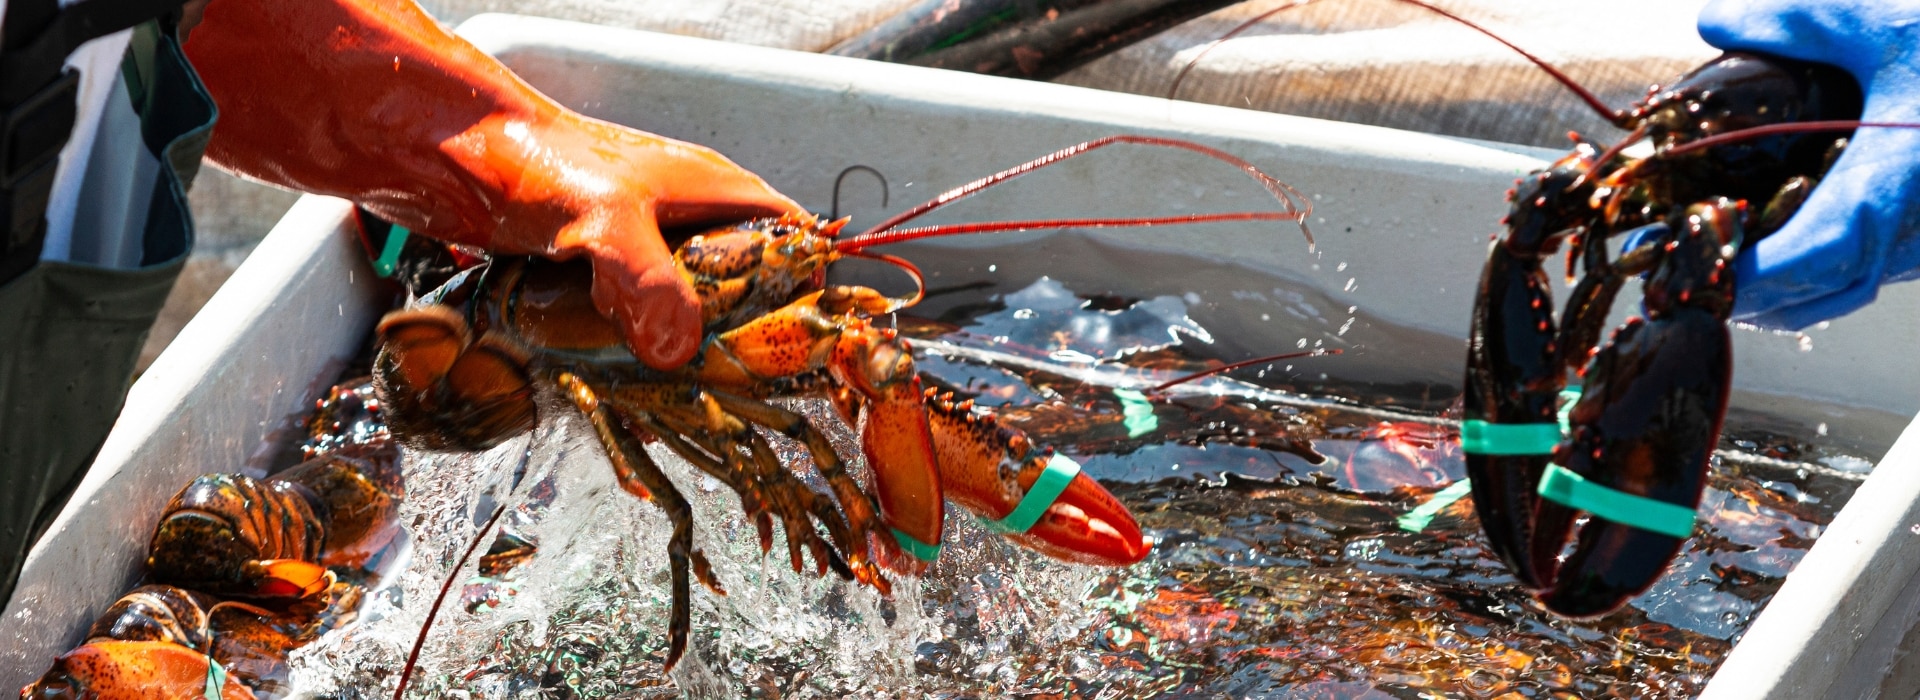 Live Maine lobster held by hand in orange glove